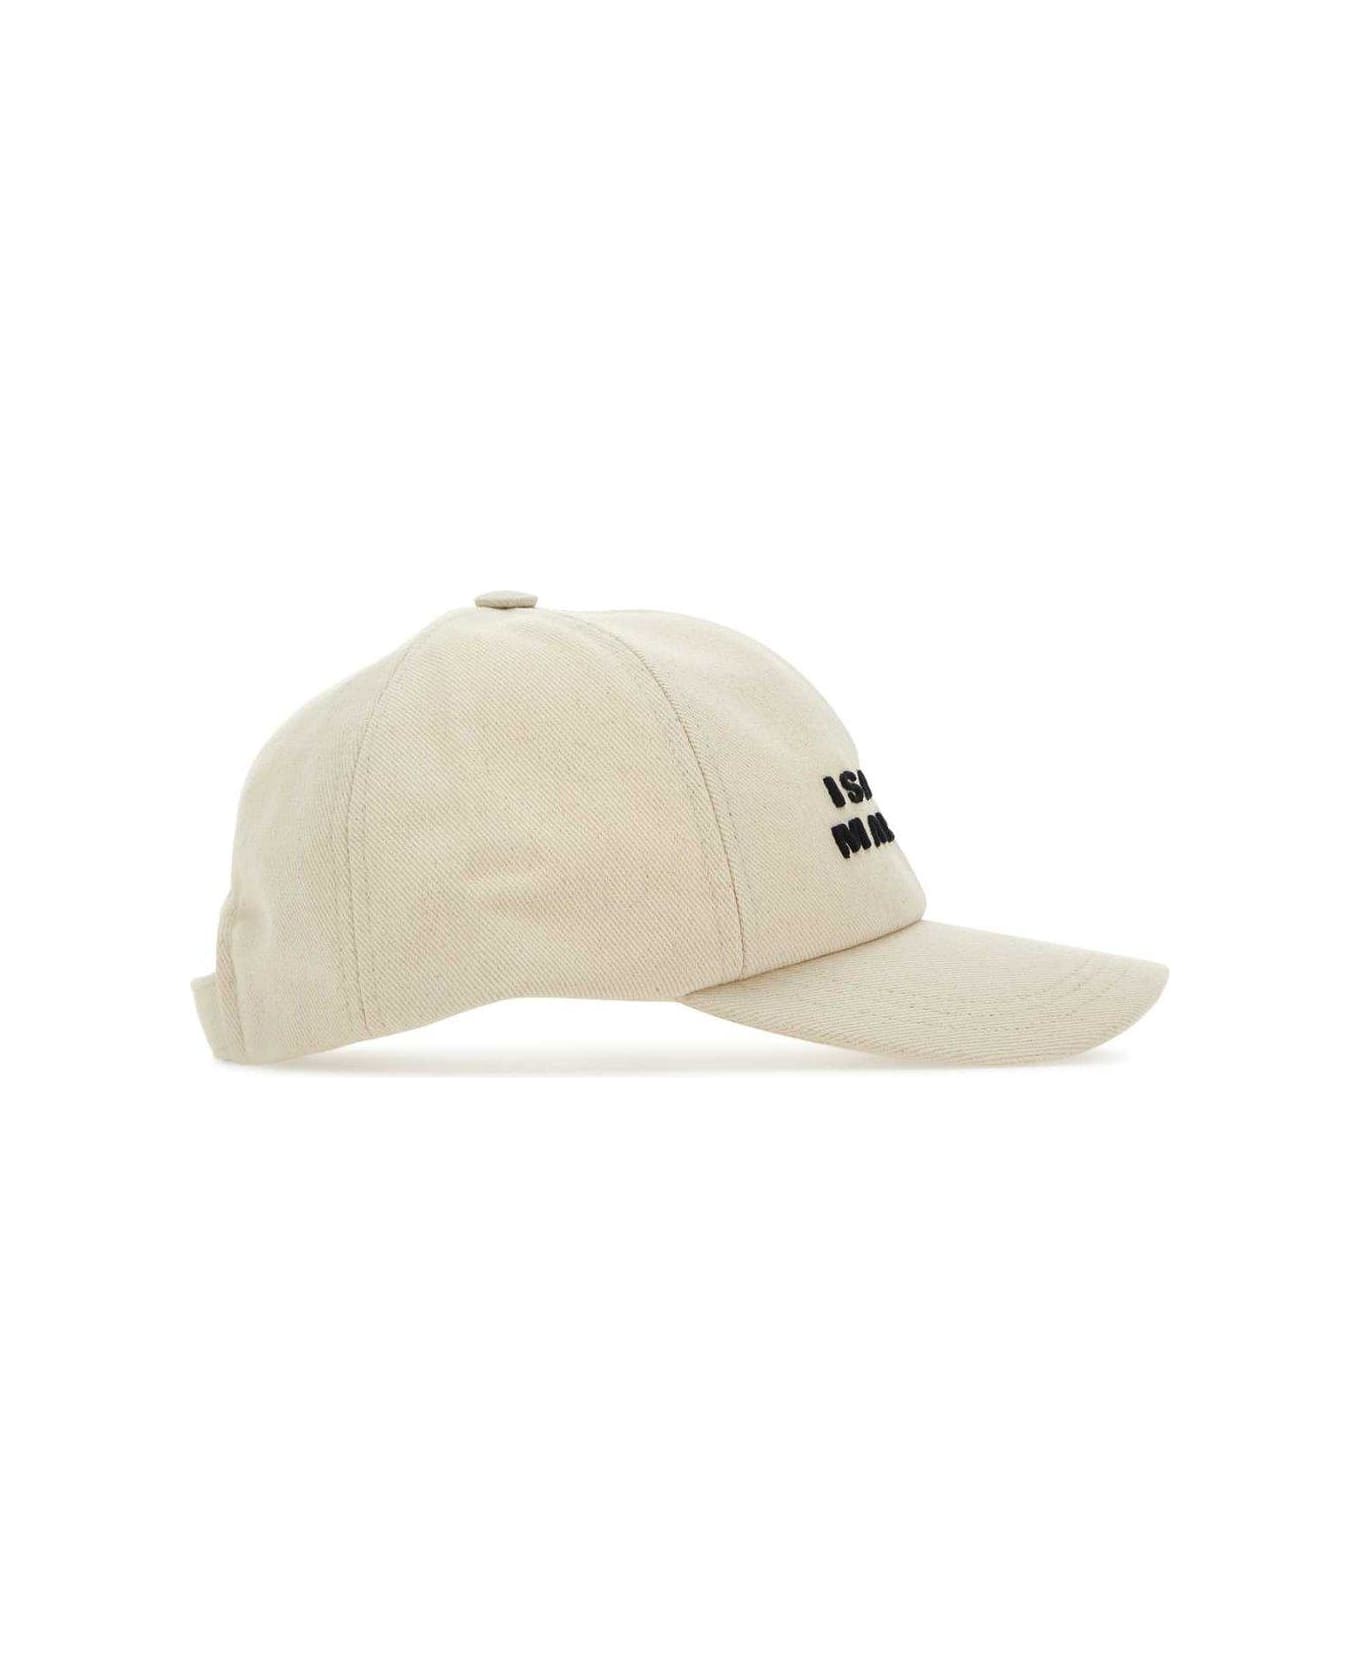 Isabel Marant Baseball Cap - Ecbk Ecru Black 帽子